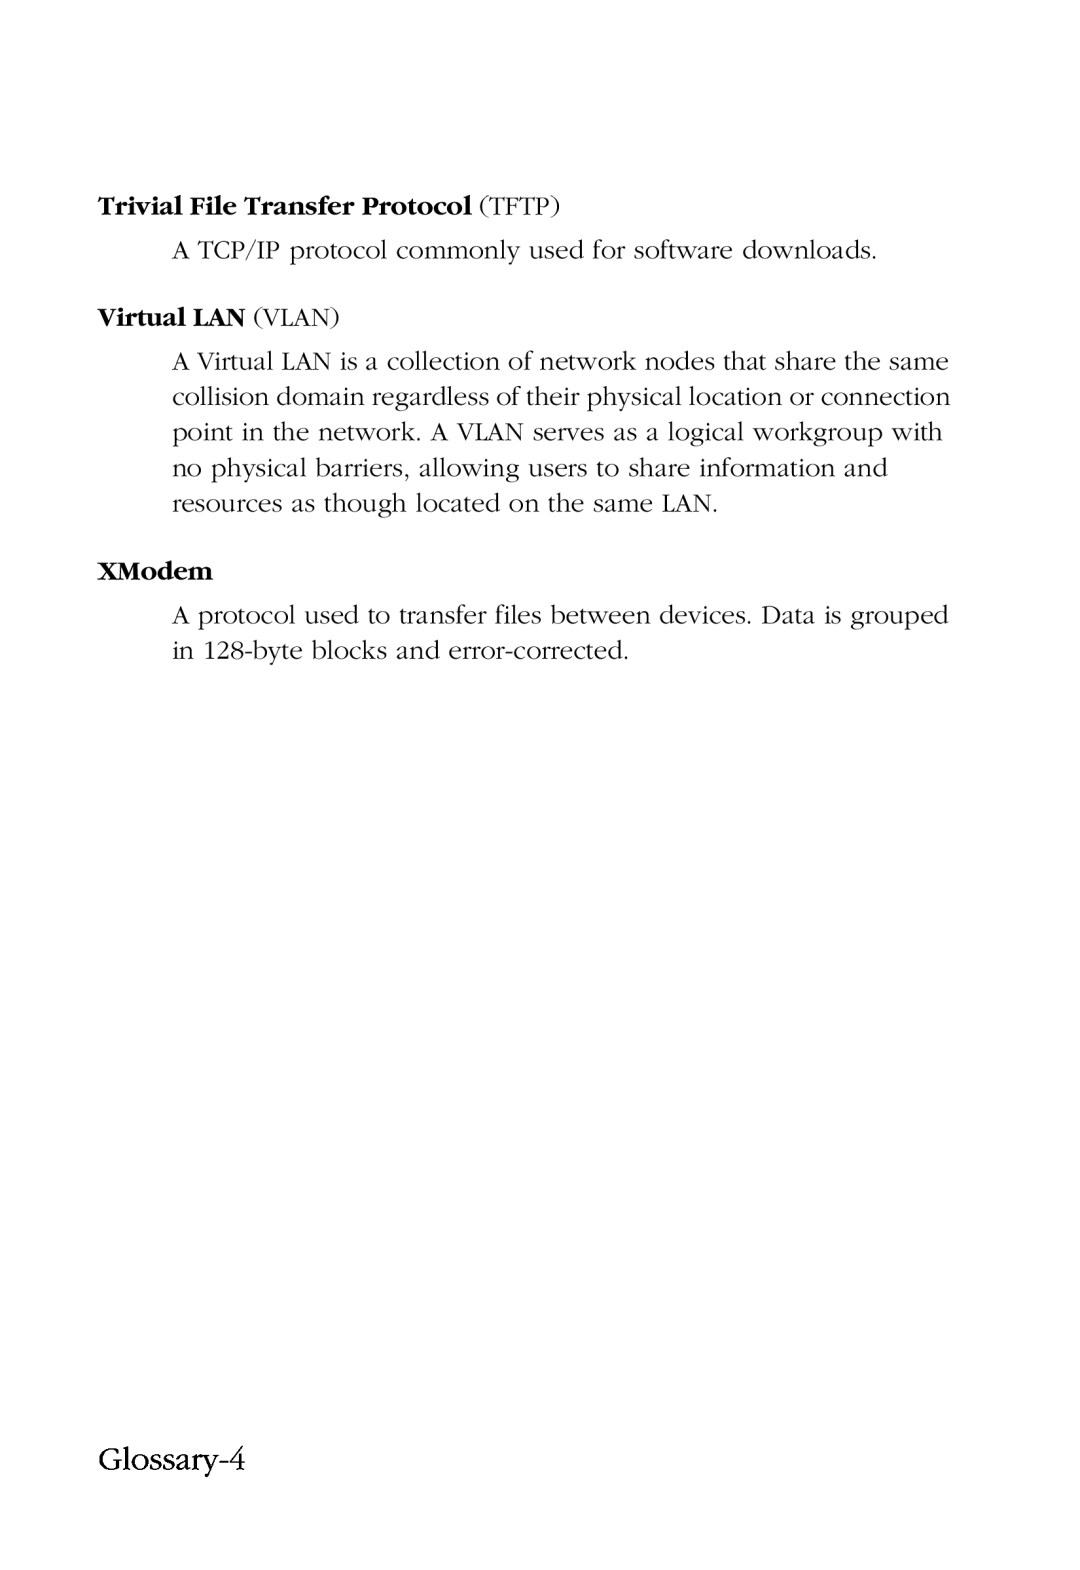 SMC Networks SMC6924VF manual Glossary-4, Trivial File Transfer Protocol TFTP, Virtual LAN VLAN, XModem 